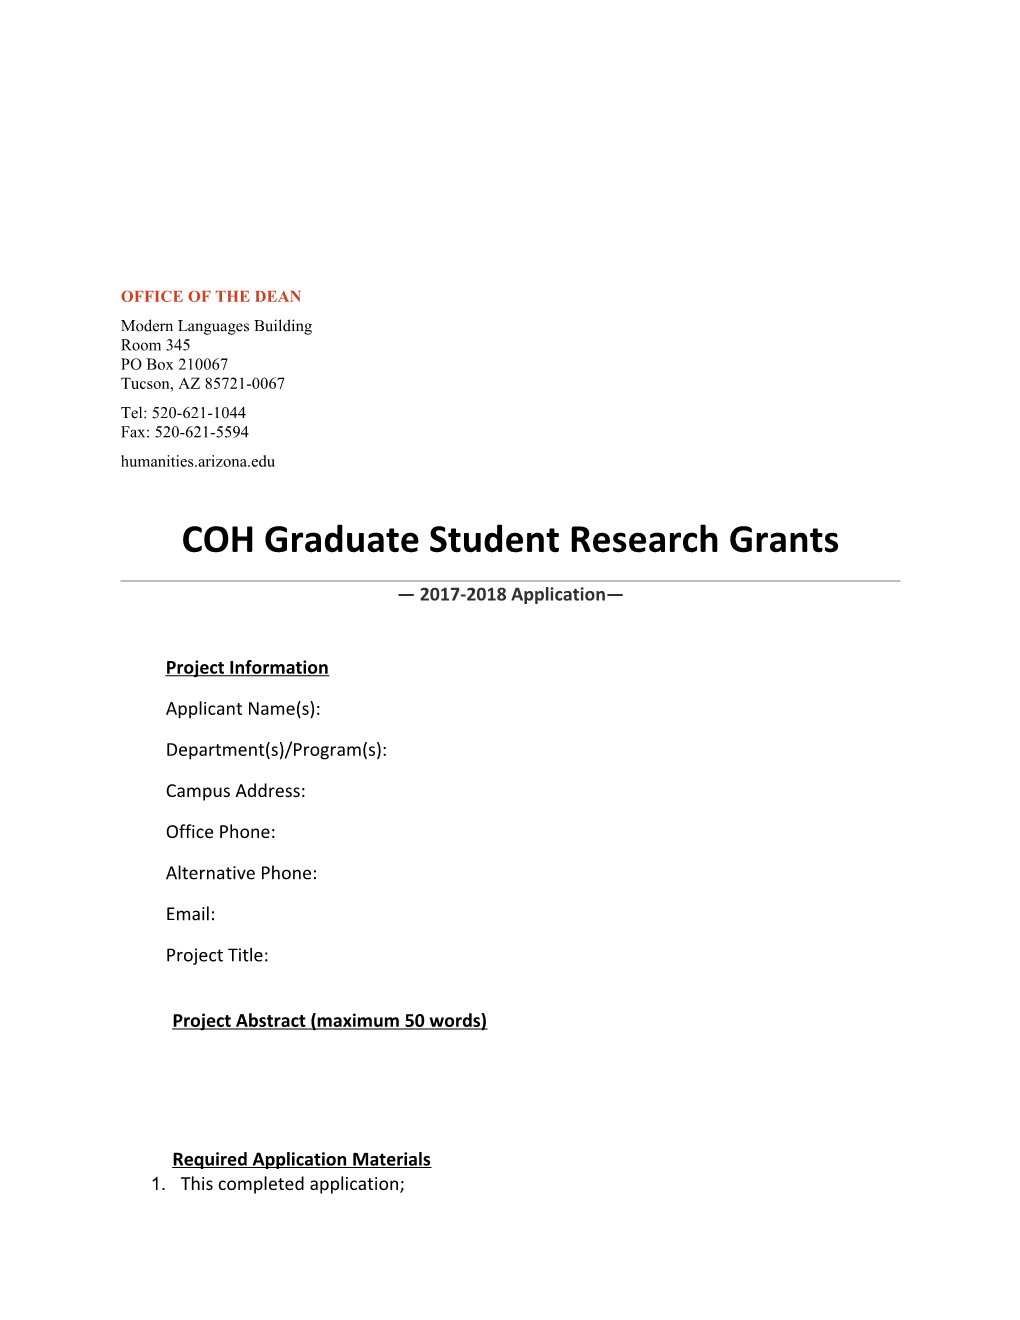 COH Graduate Student Research Grants